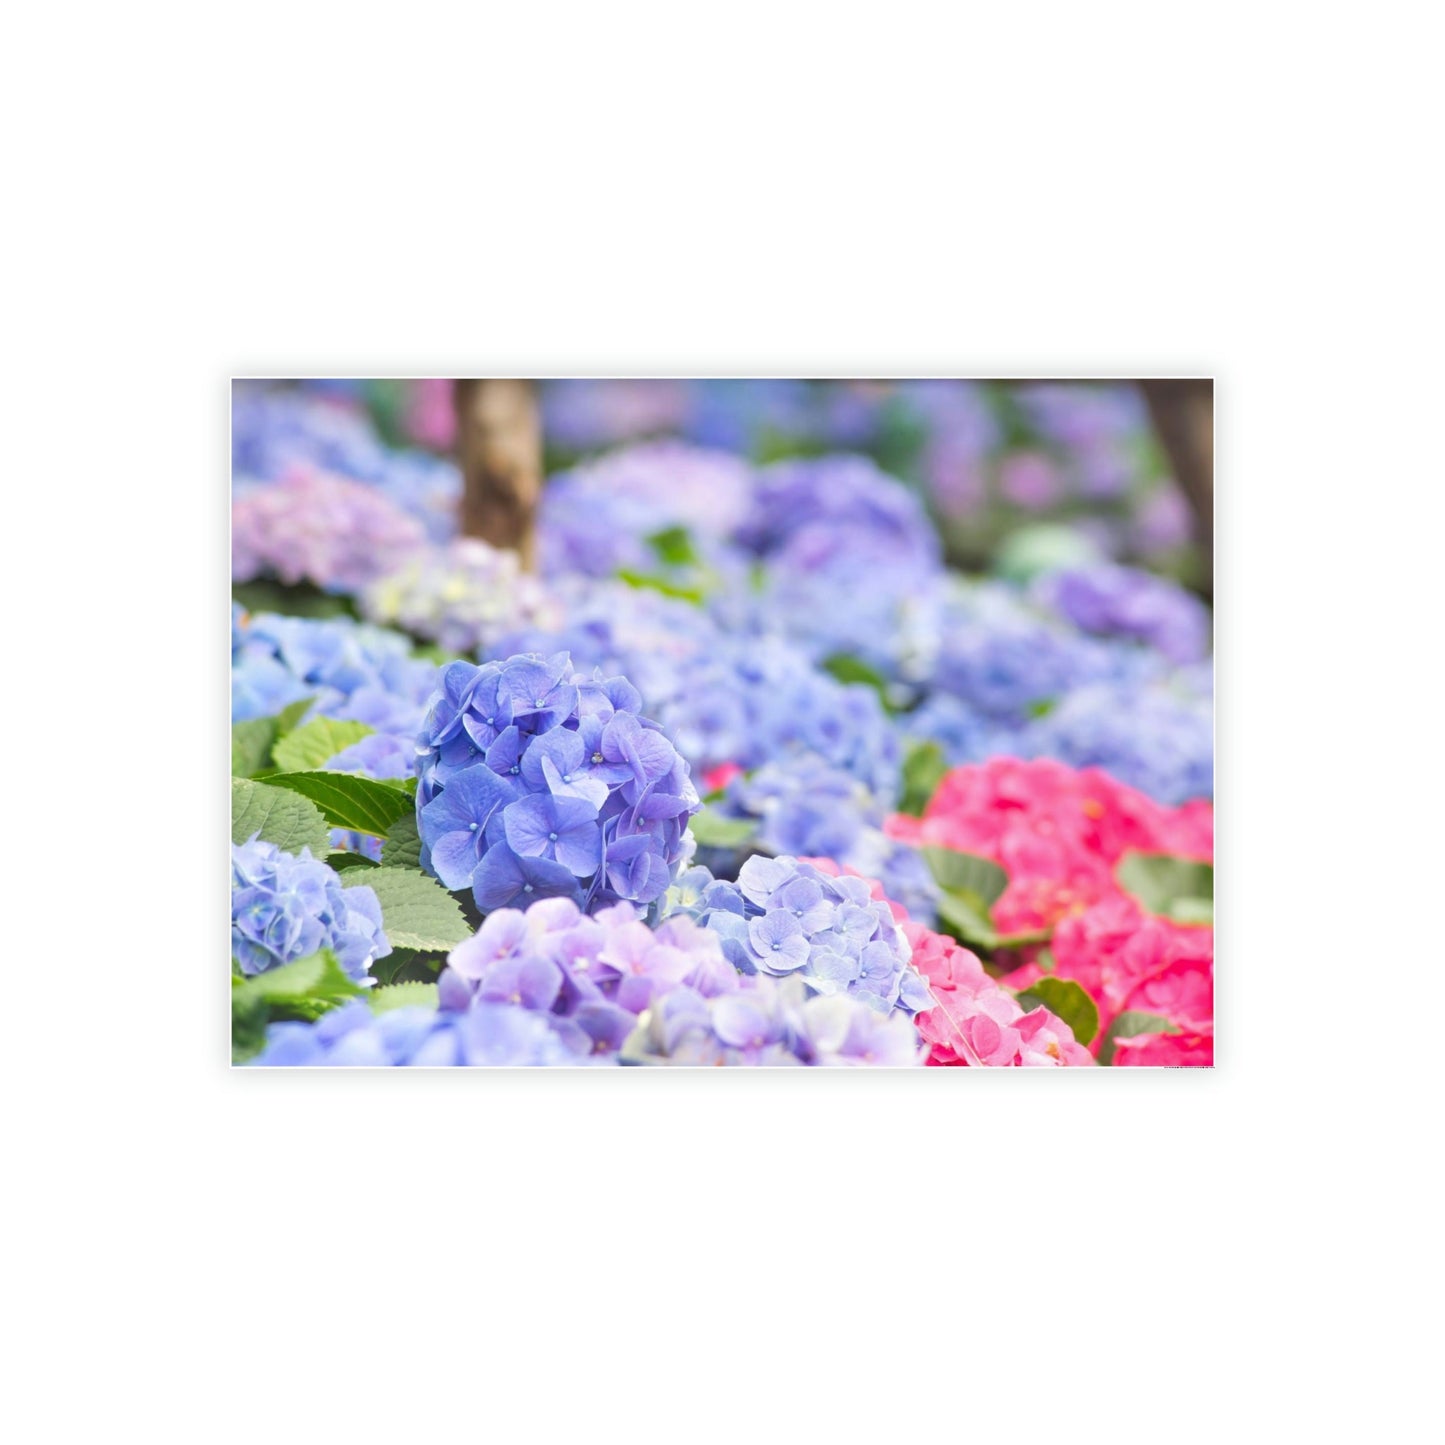 Hydrangea Harmony: A Unity of Flowers